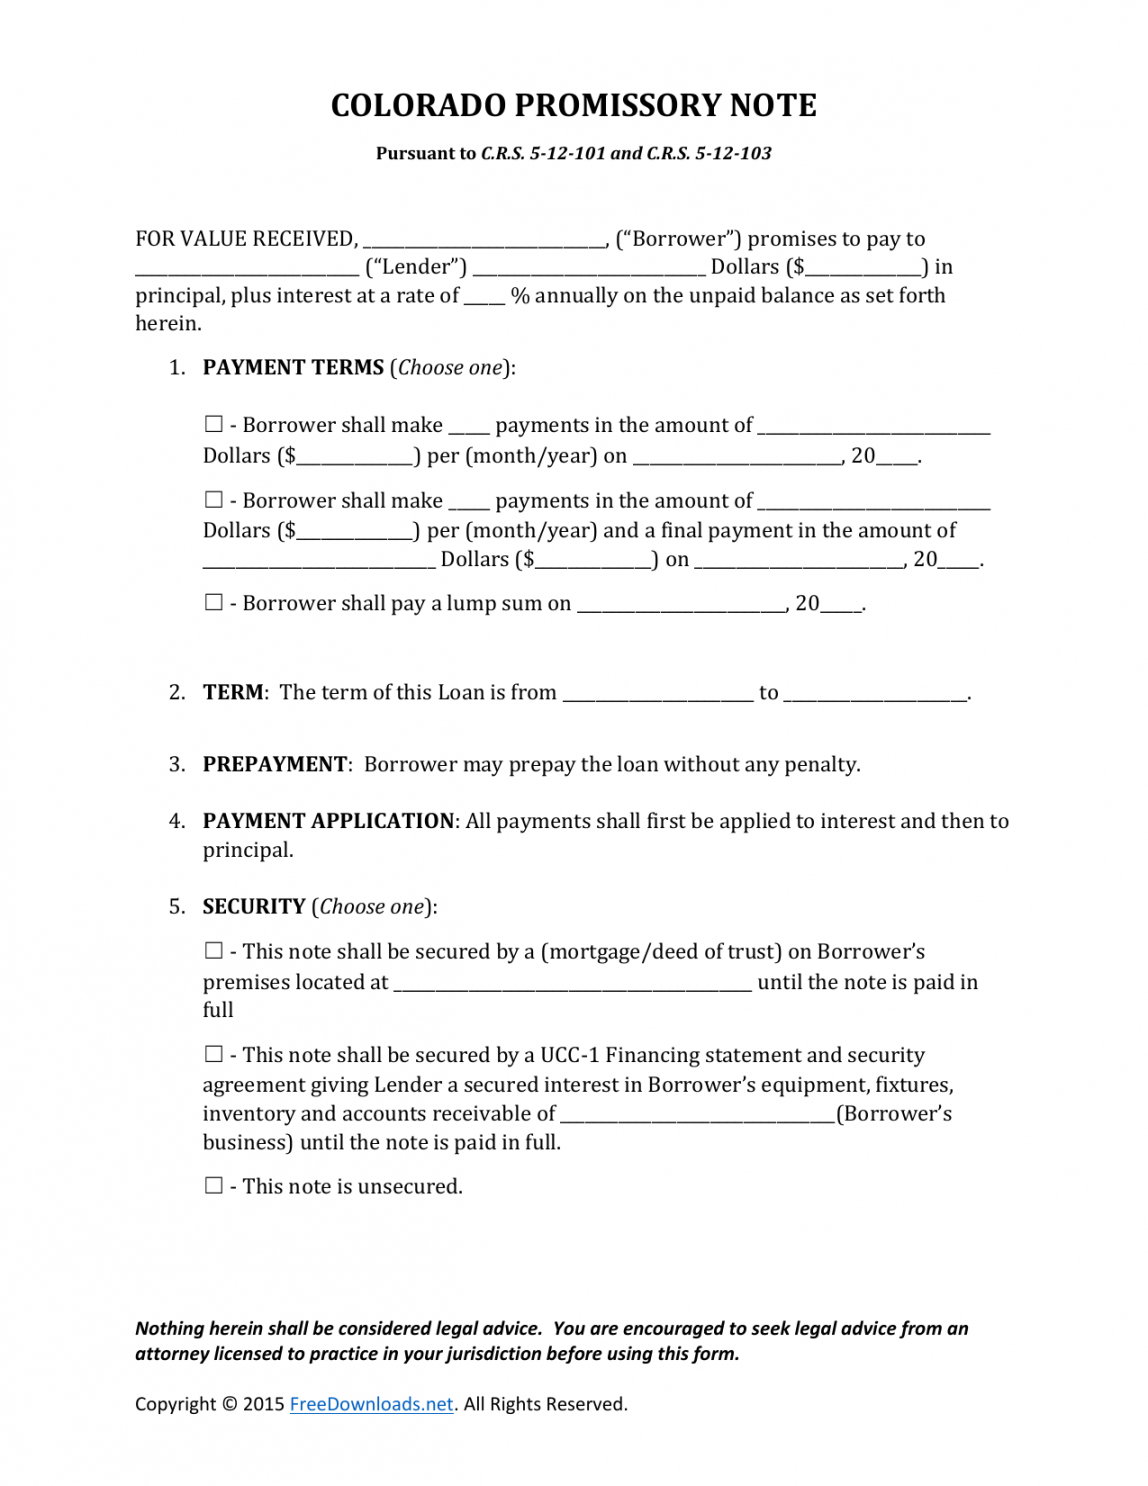 sample download colorado promissory note form  pdf  rtf  word international promissory note template pdf